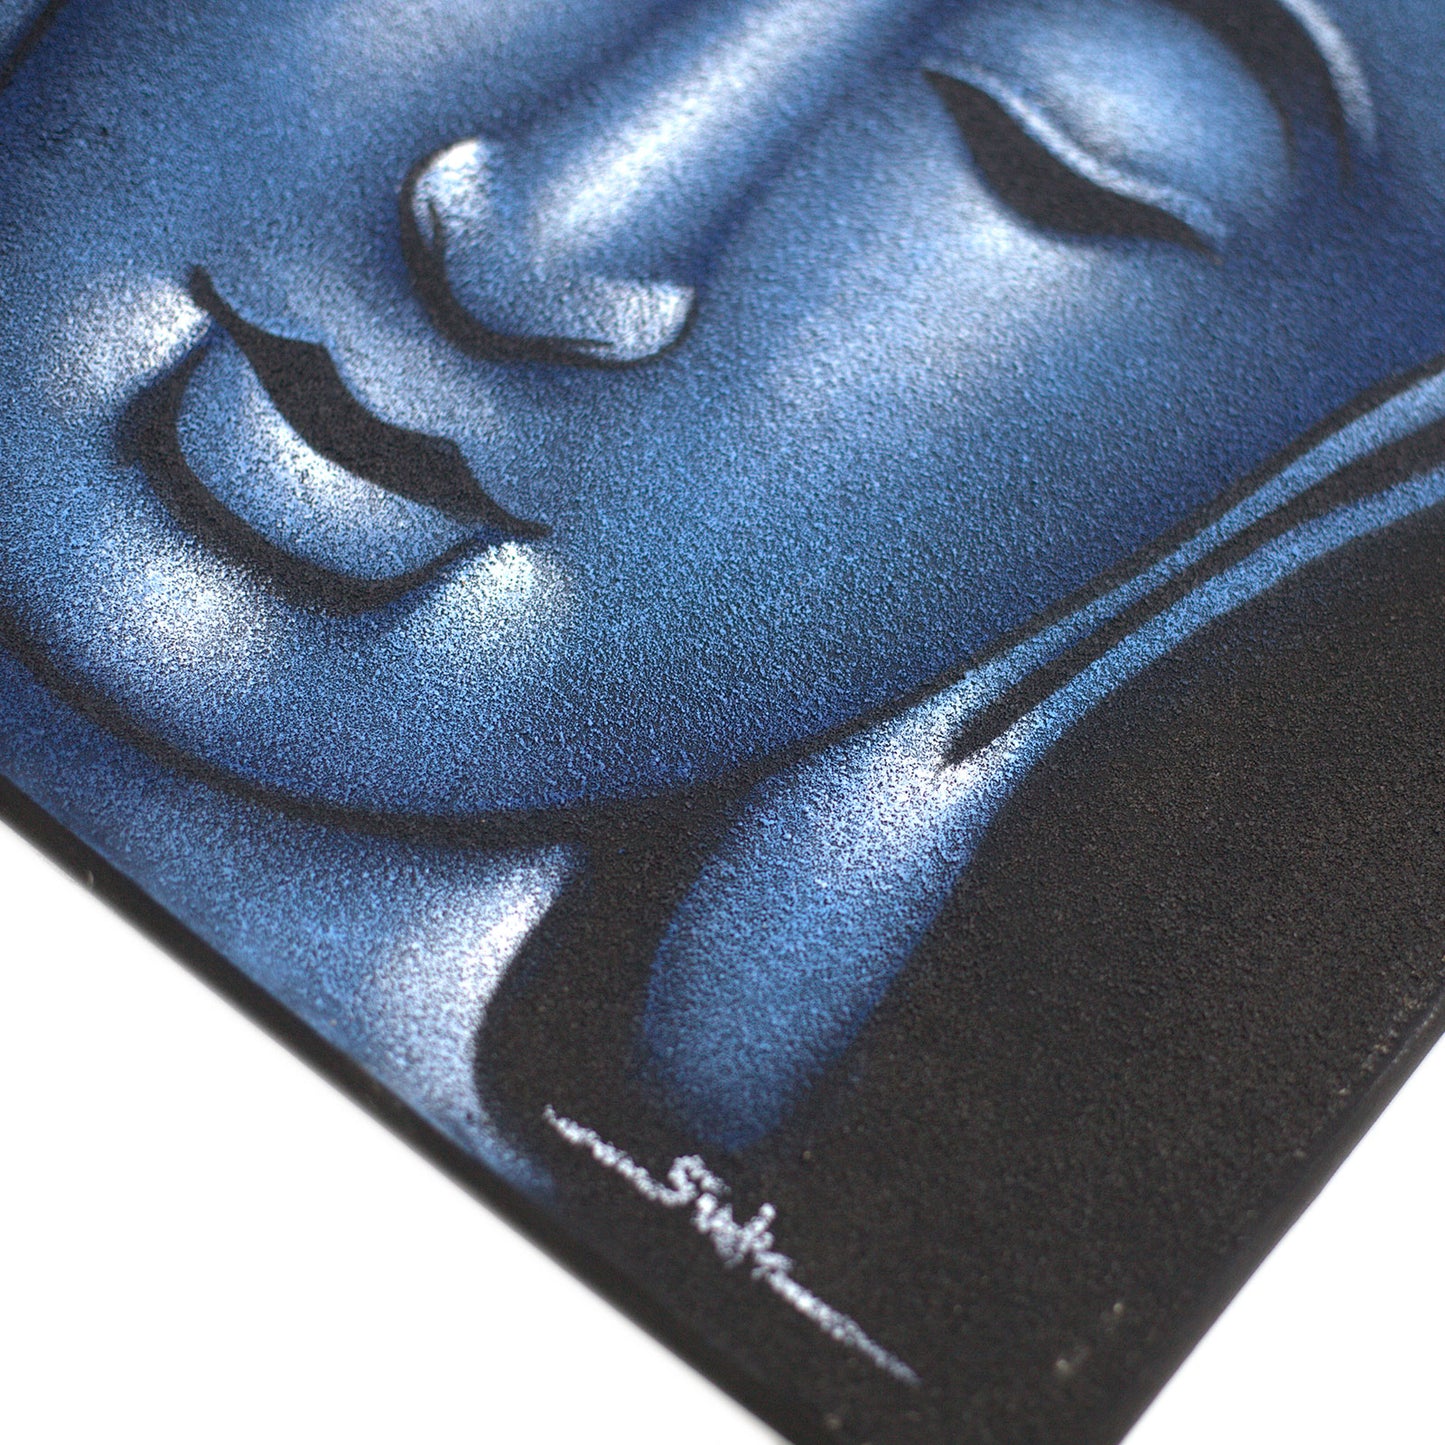 Buddha painting Blue sand finish